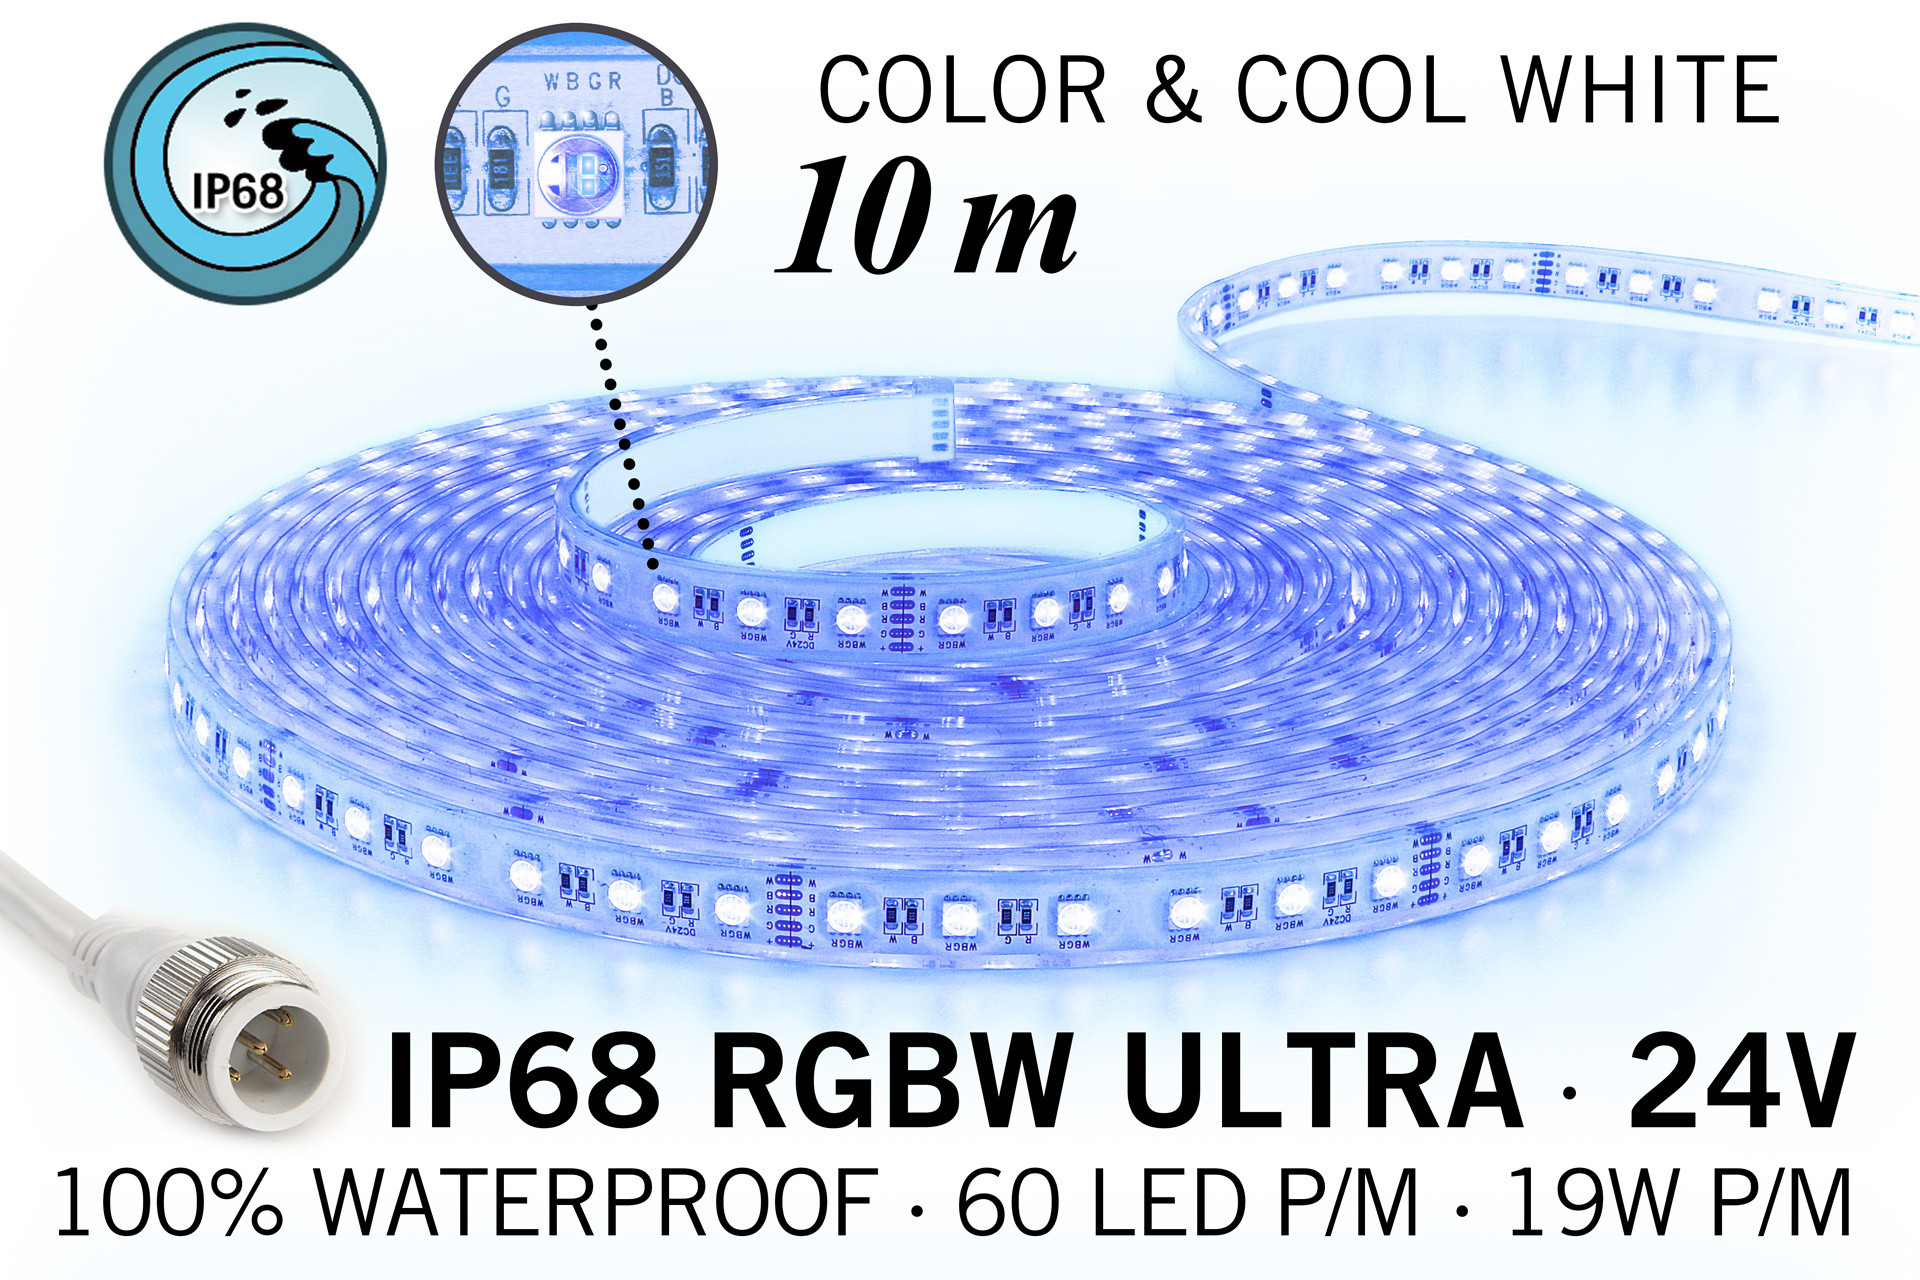 IP68 Waterdichte RGBW ULTRA Ledstrip, RGB+Koel wit, 60 led's p/m, 24 Volt, 10 meter